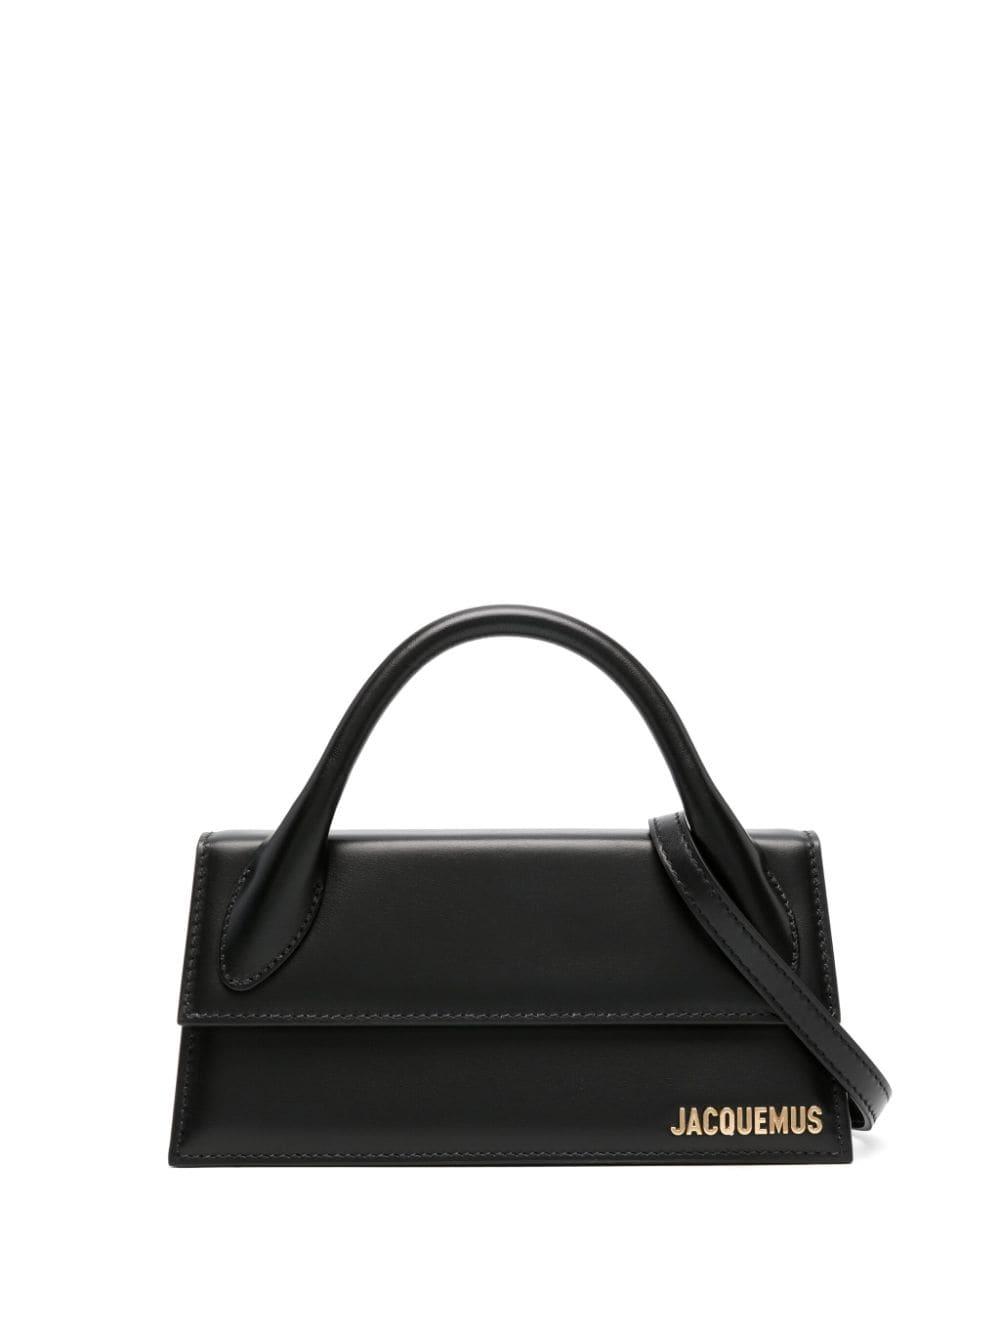 JACQUEMUS Le Chiquito Long Leather Top Handle Bag